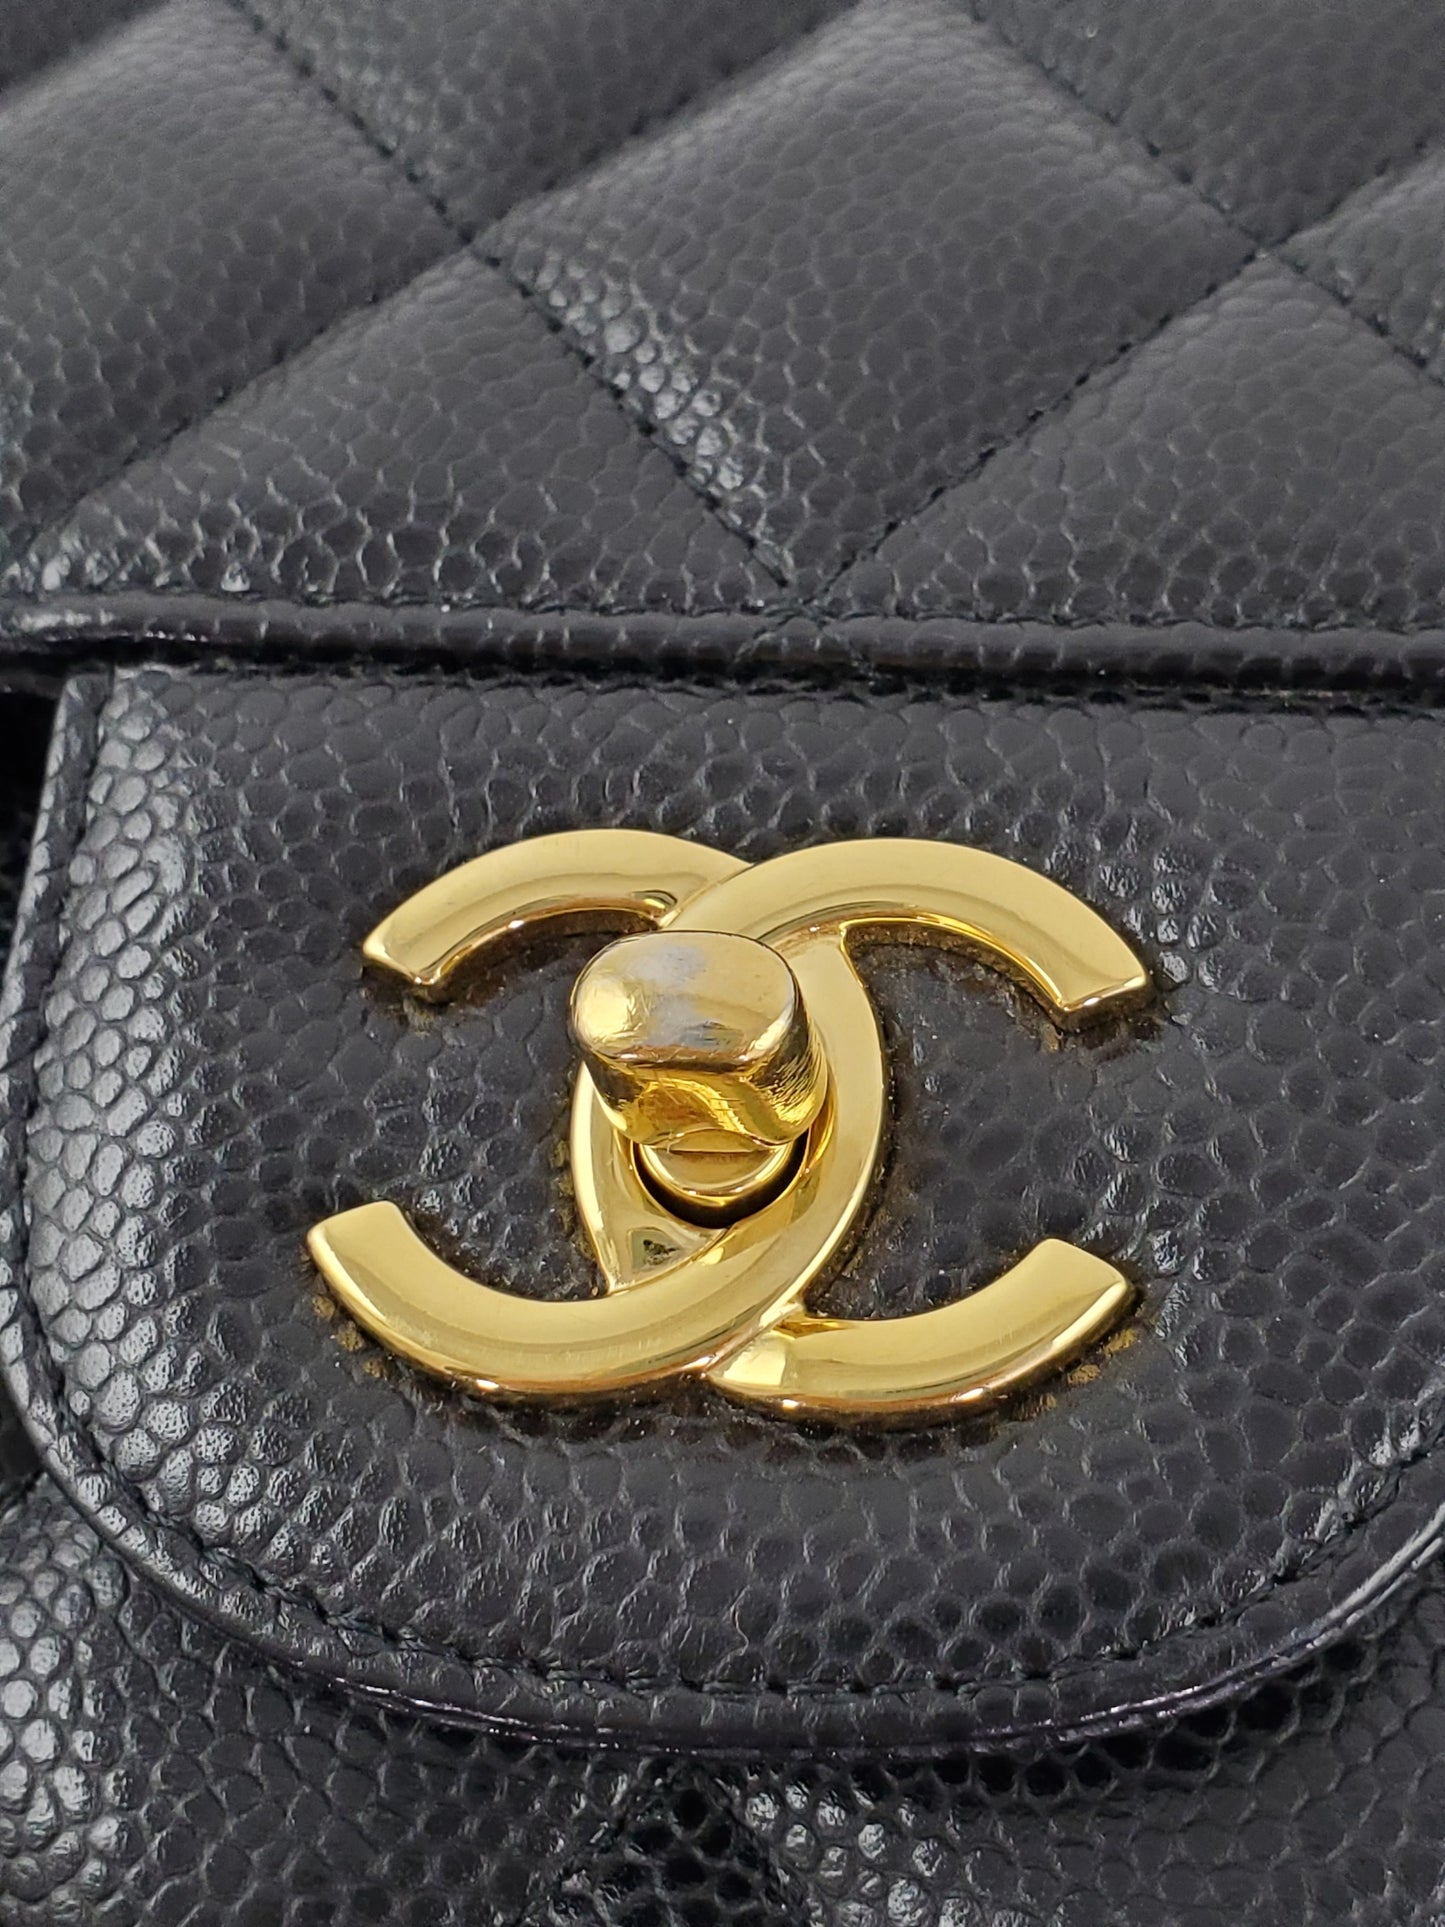 CHANEL Black Caviar Jumbo Classic Double Flap Bag